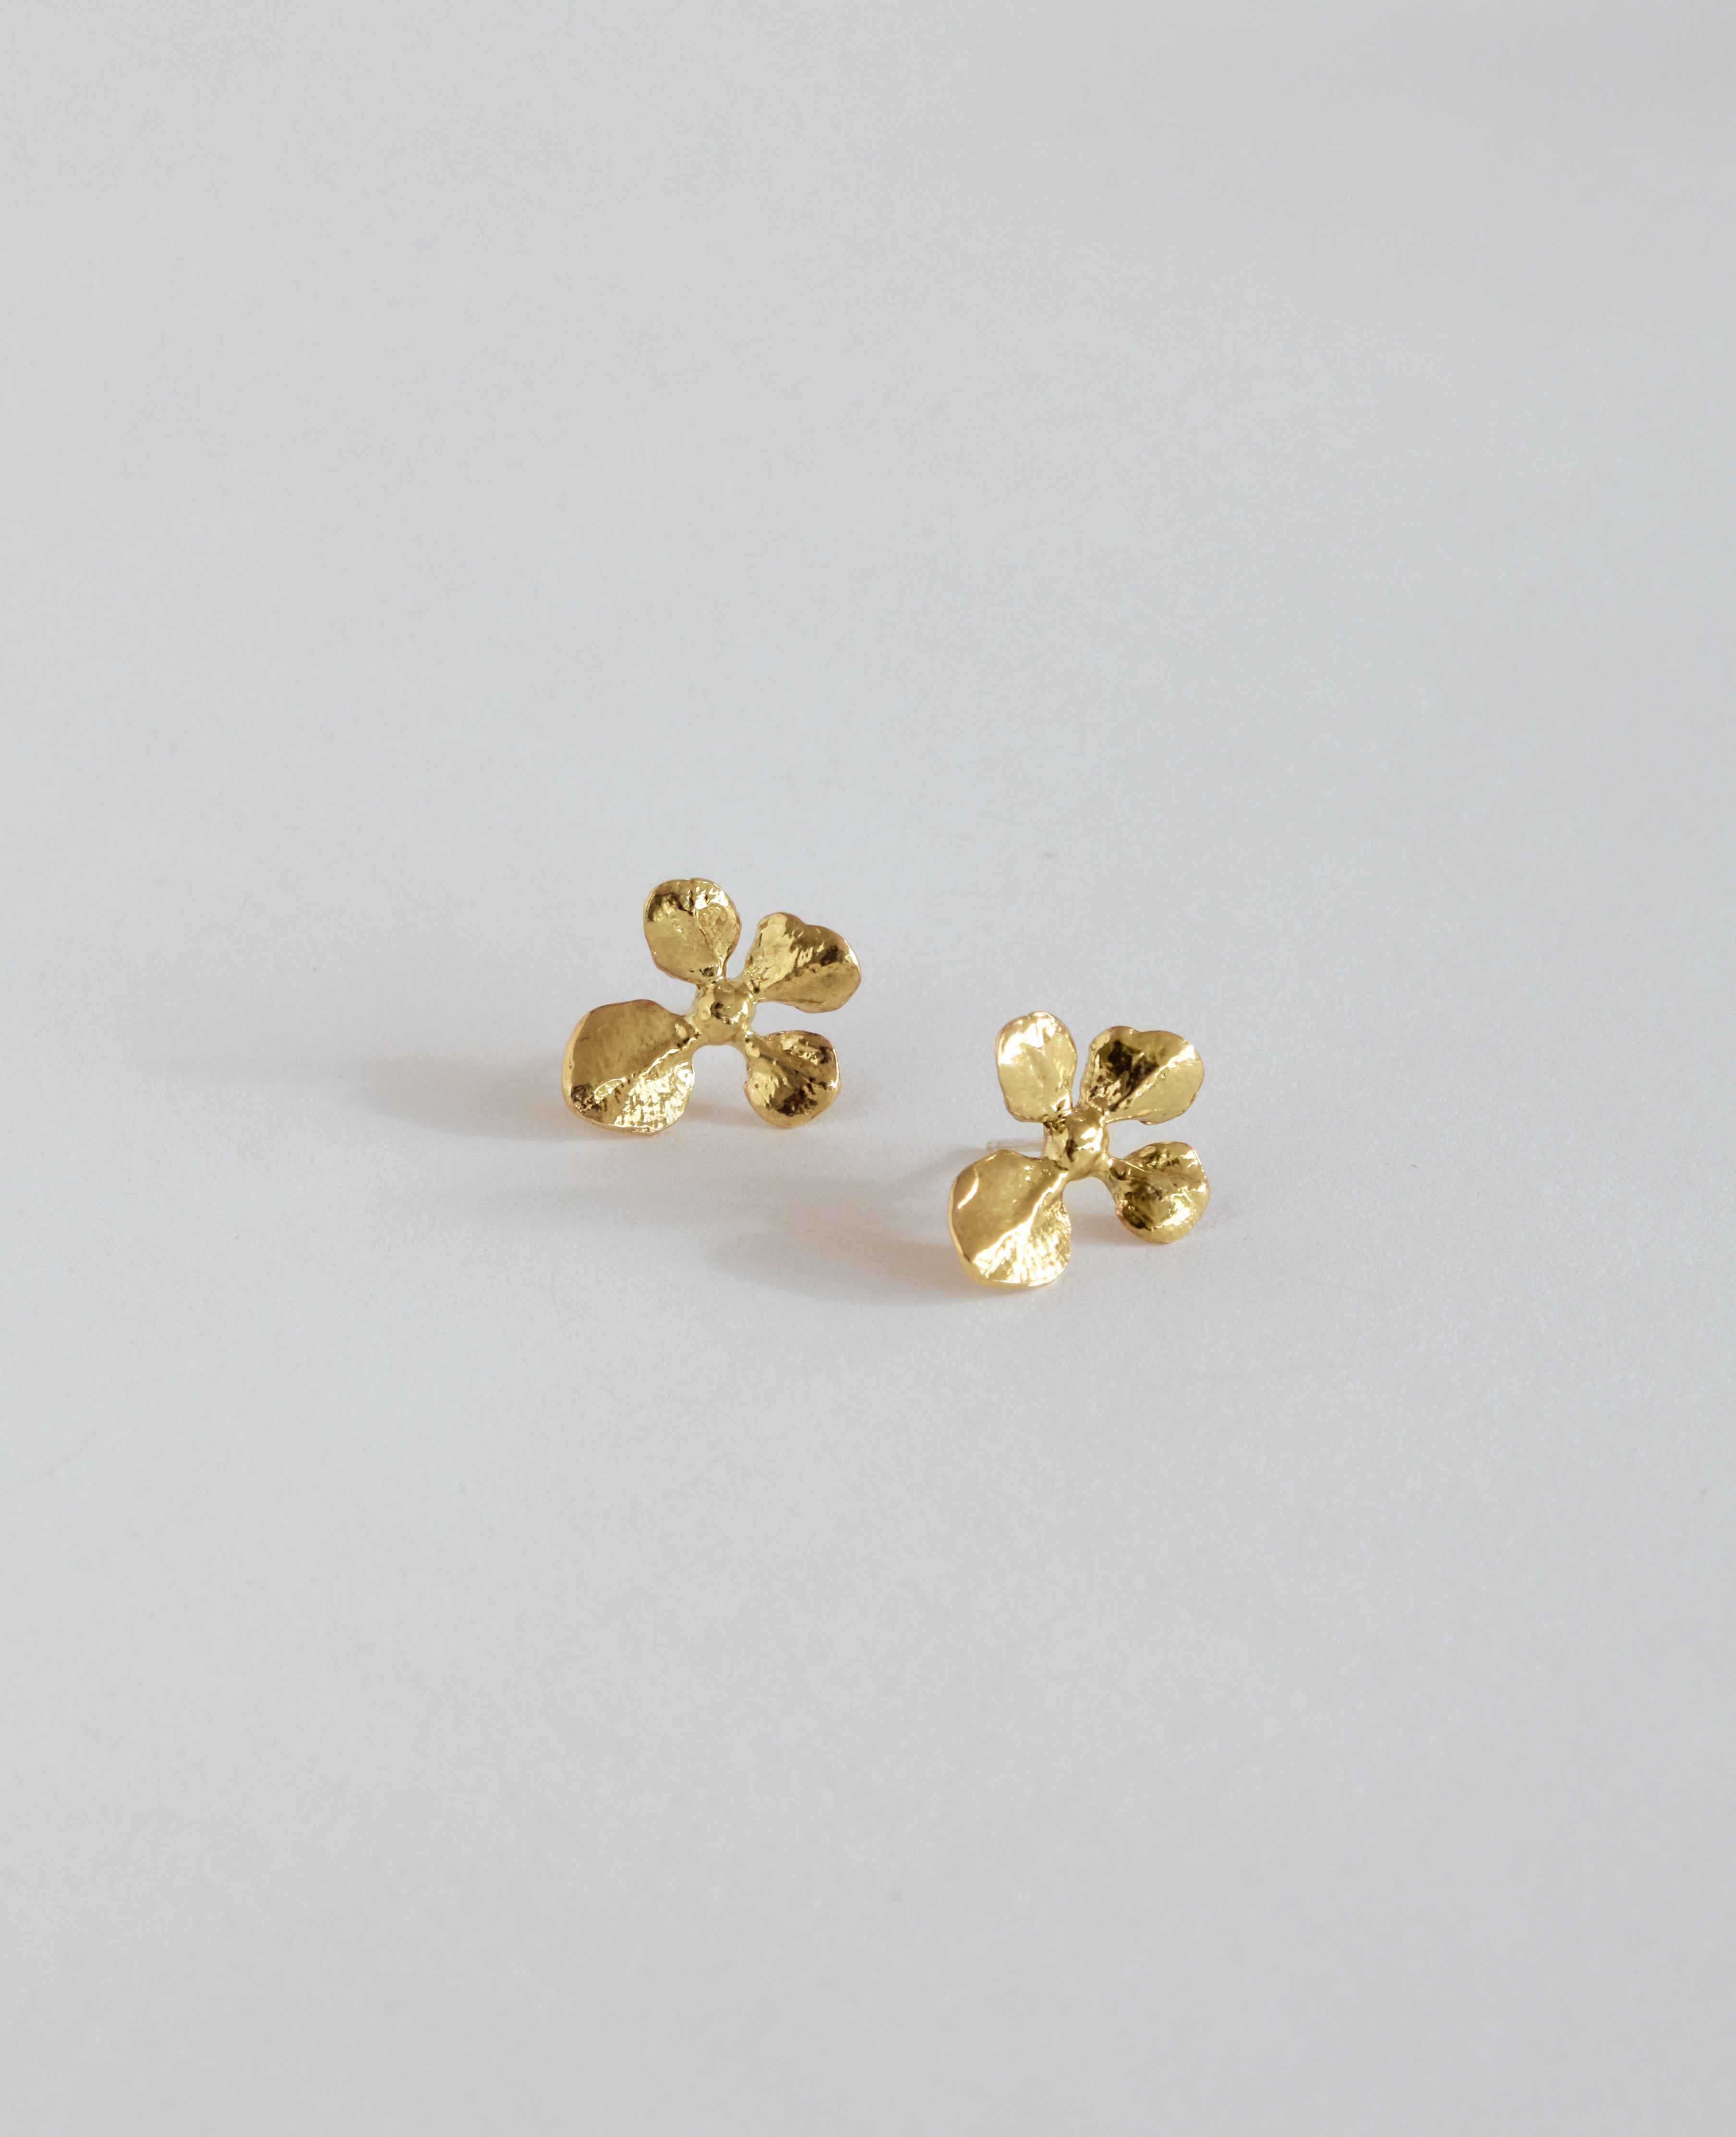 VIRGO BUDS // golden - ORA-C jewelry - handmade jewelry by Montreal based independent designer Caroline Pham